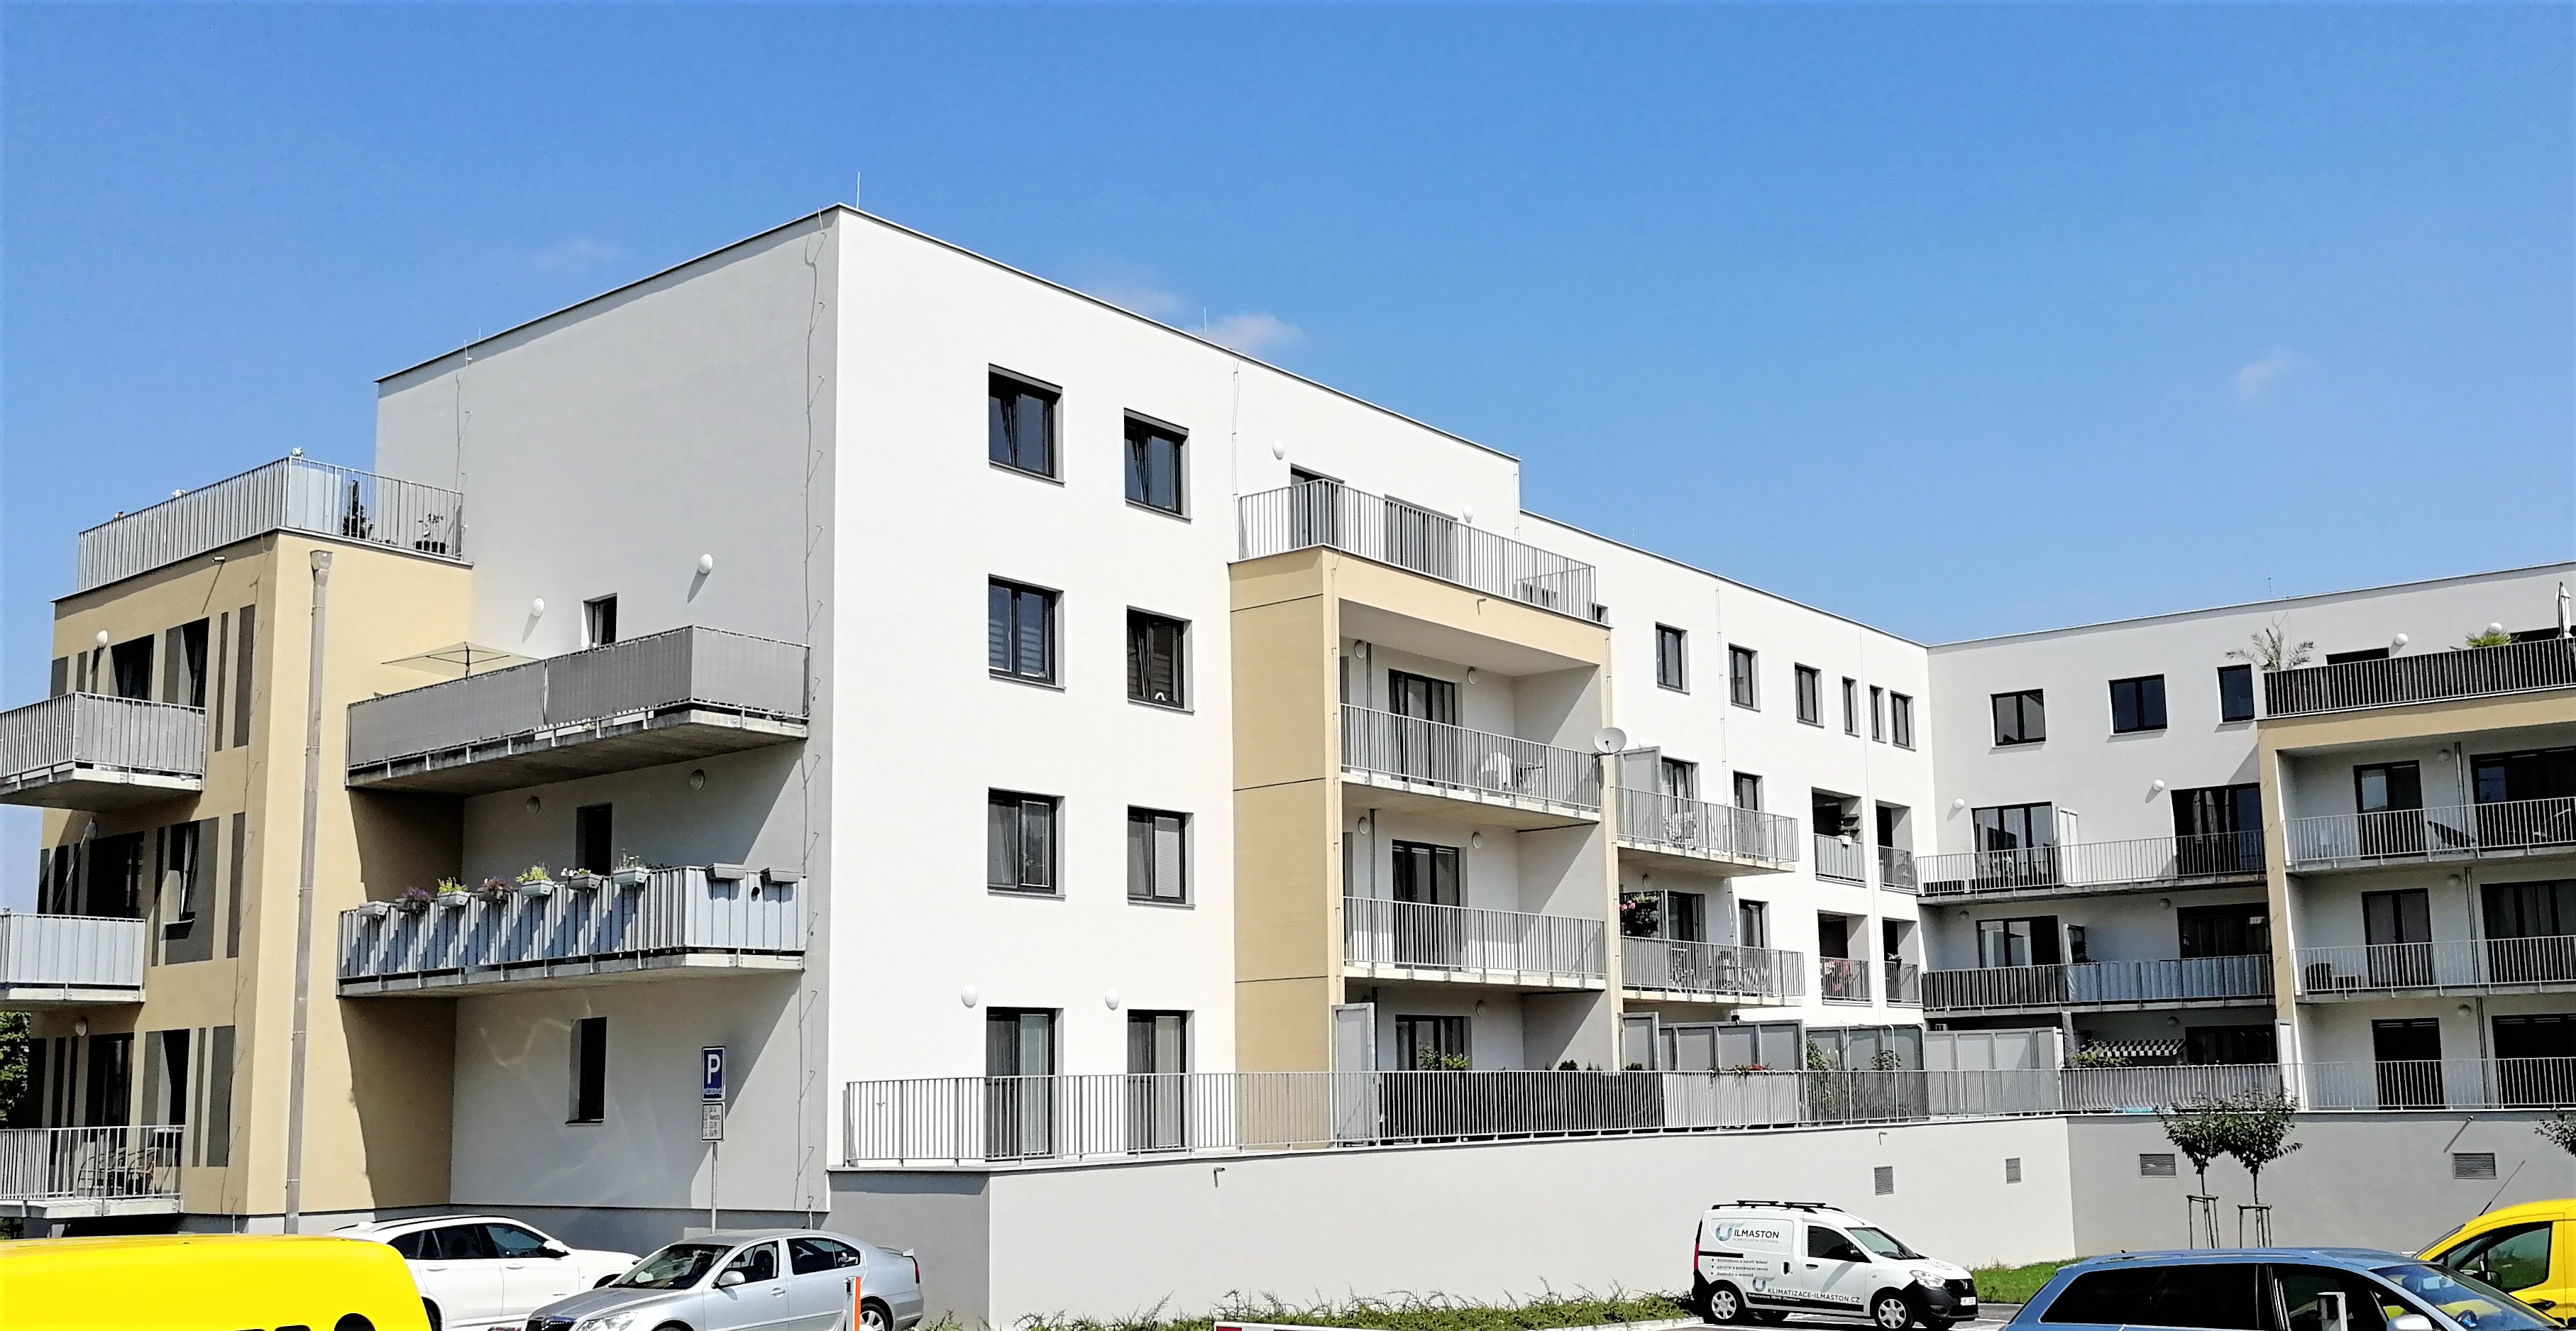 Apartment building Stupkova, Olomouc